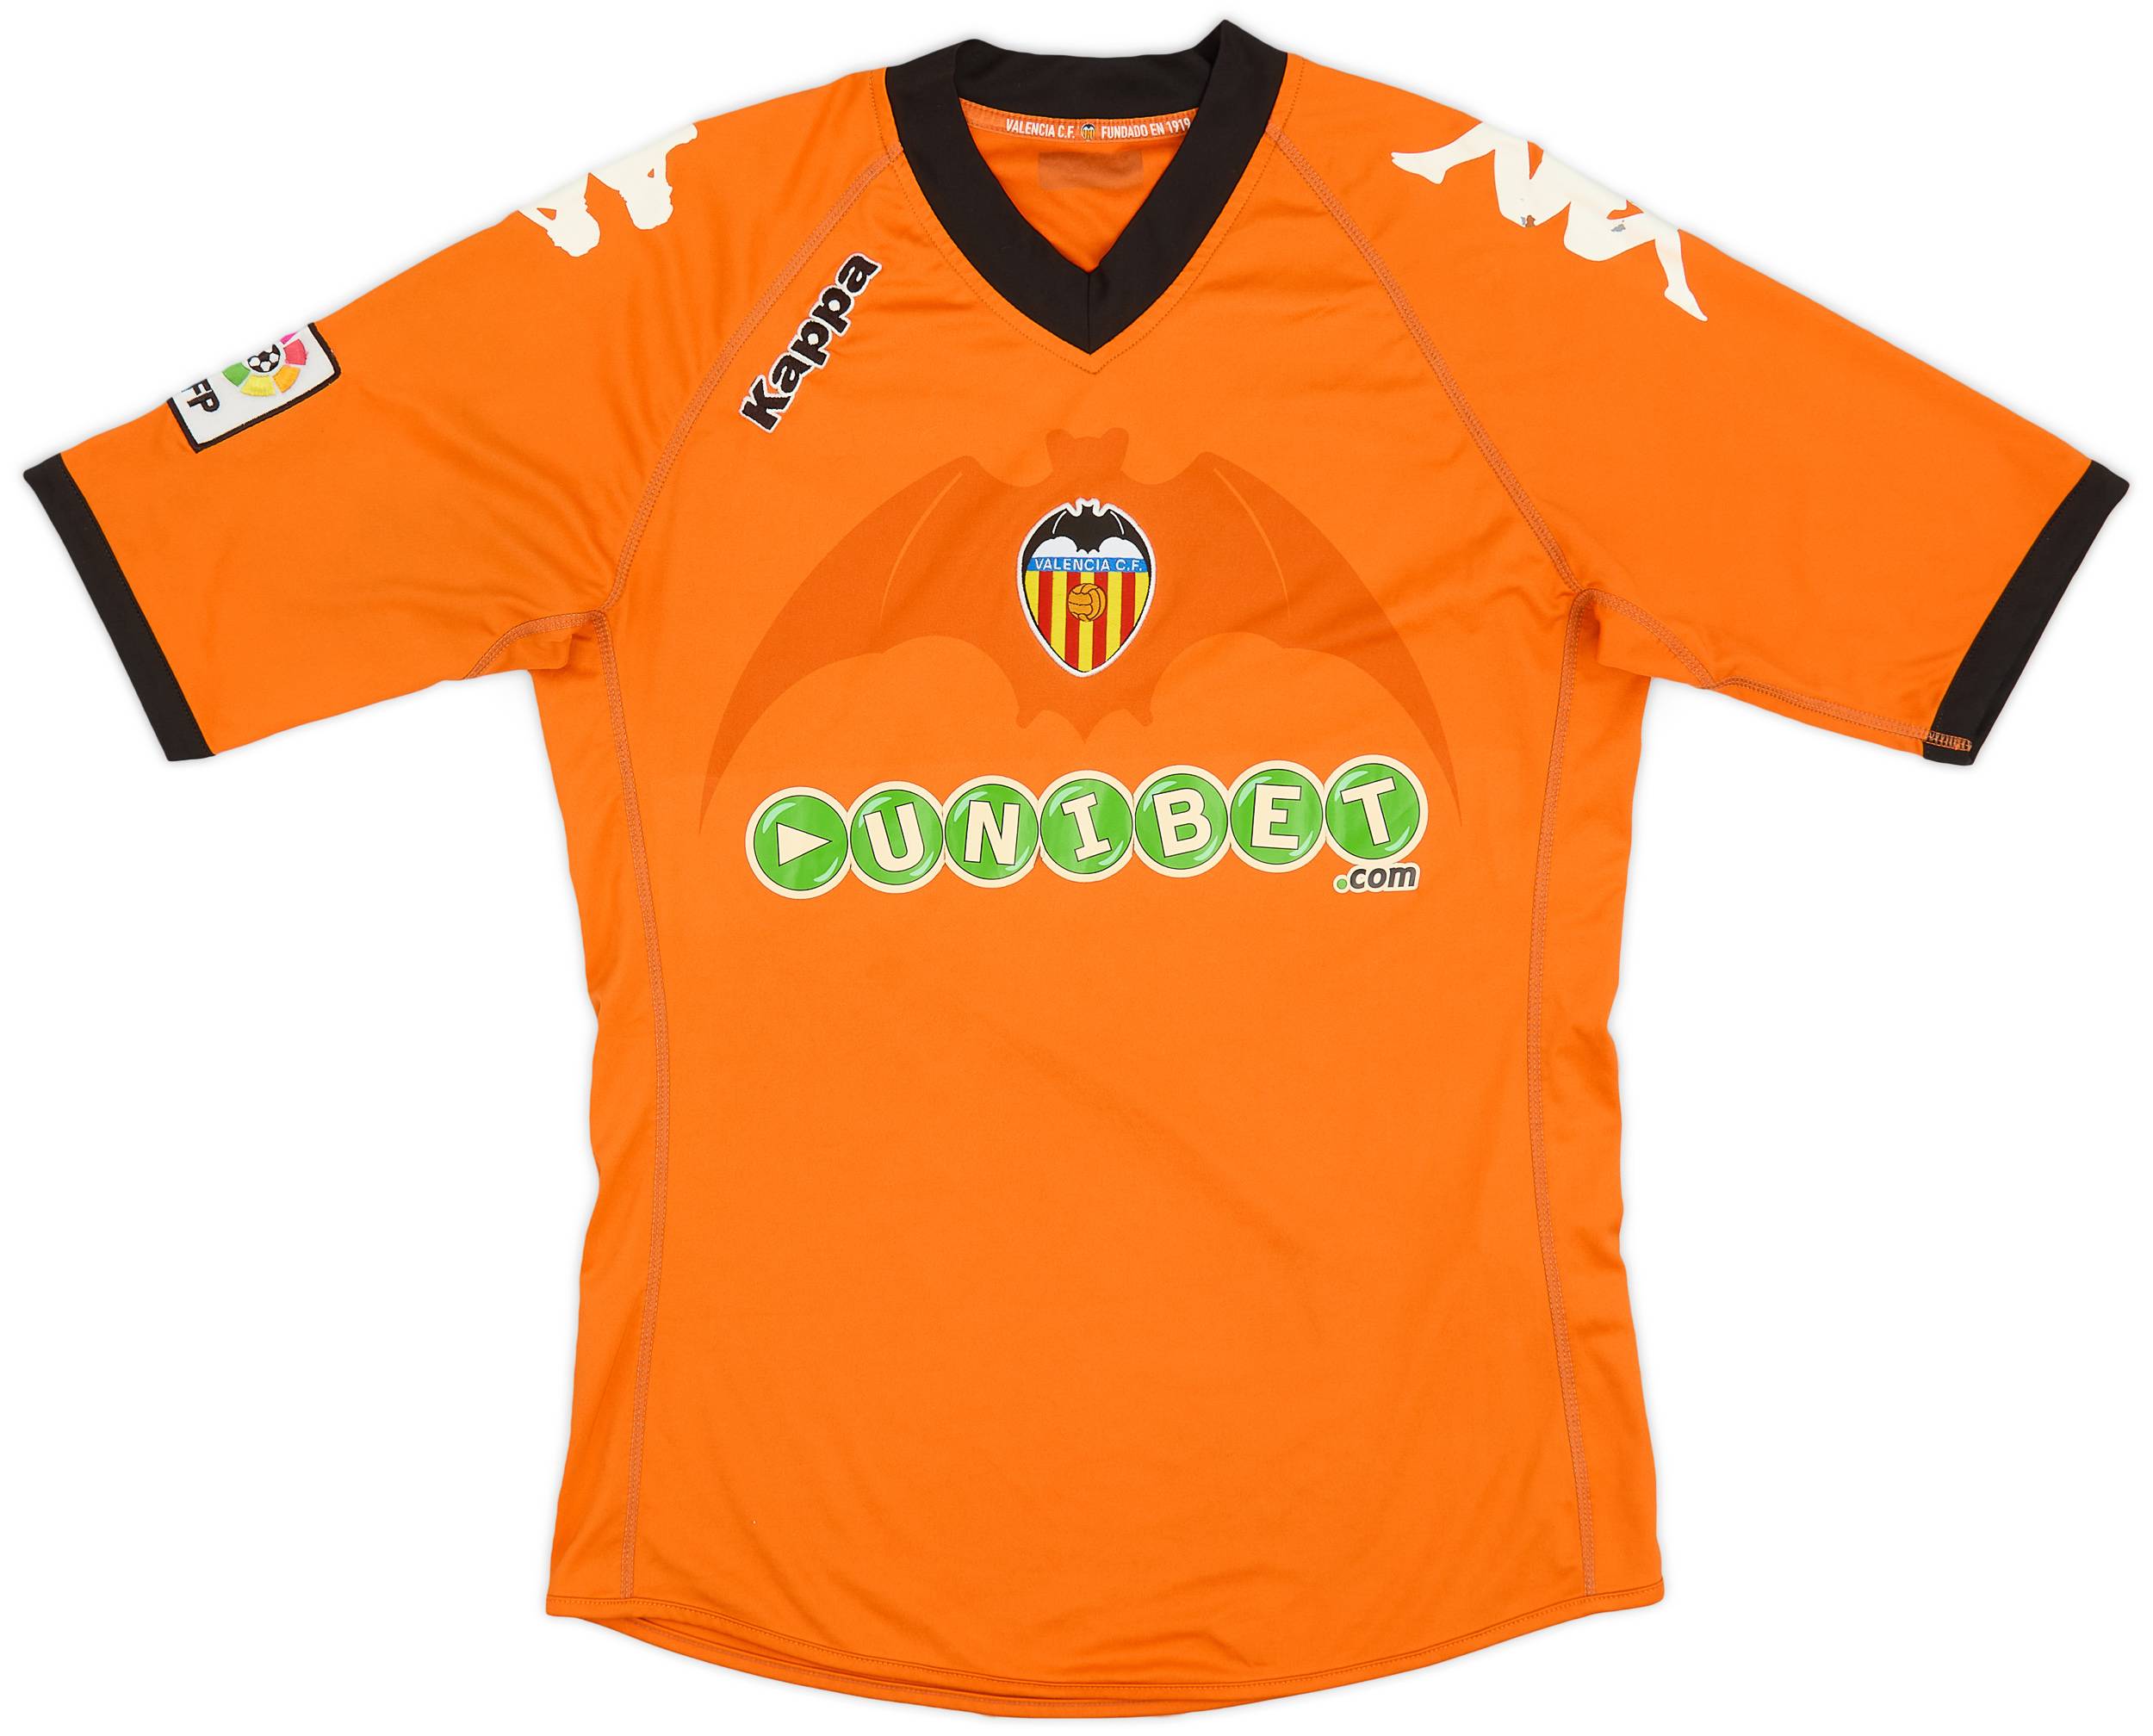 2010-11 Valencia Away Shirt - 6/10 - (XL)